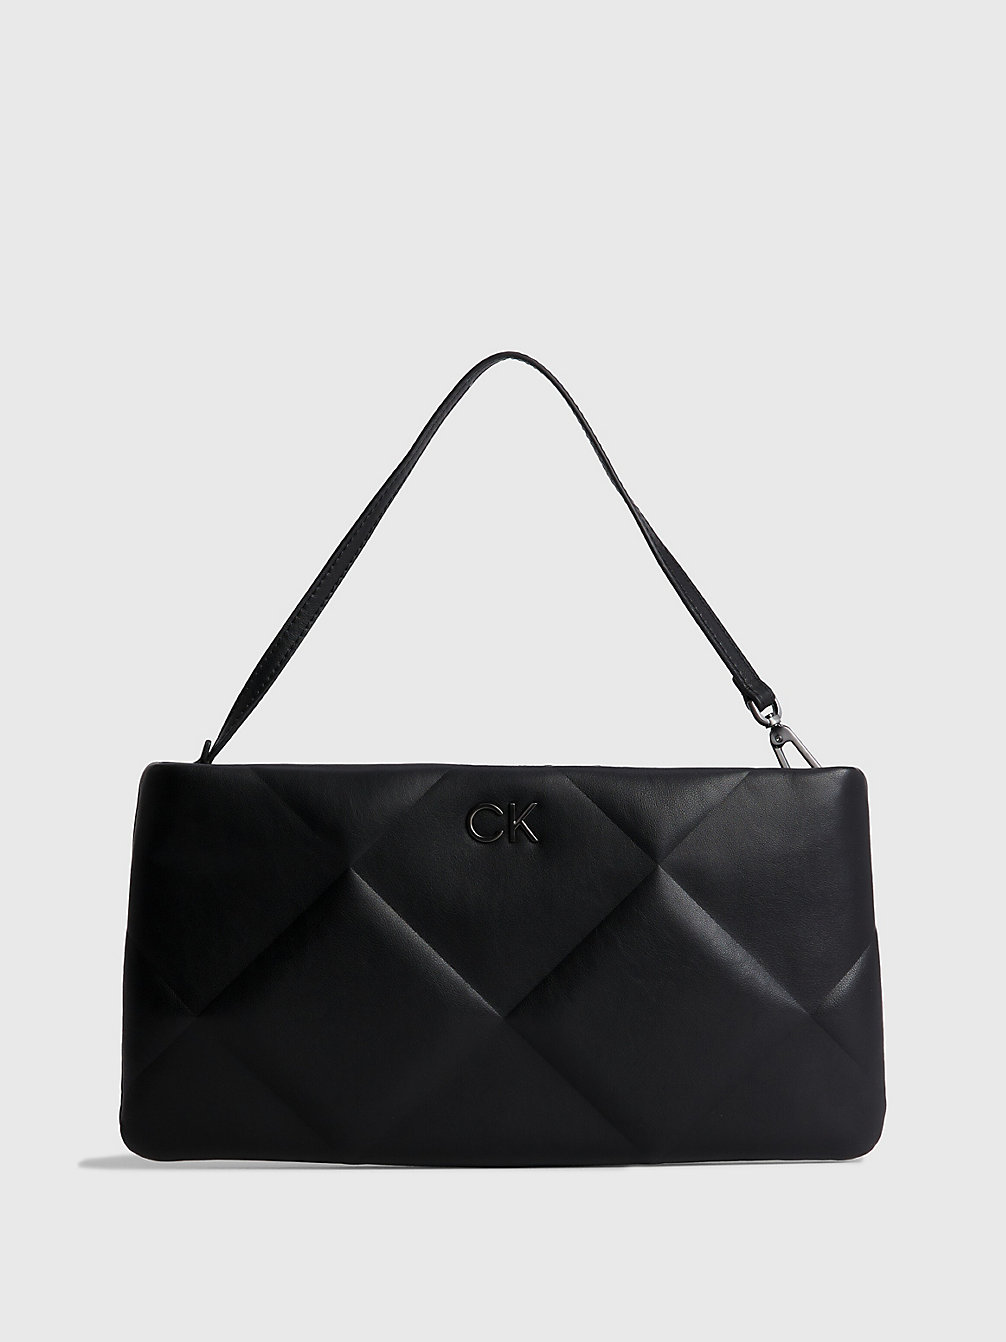 CK BLACK Quilted Convertible Clutch Bag undefined women Calvin Klein